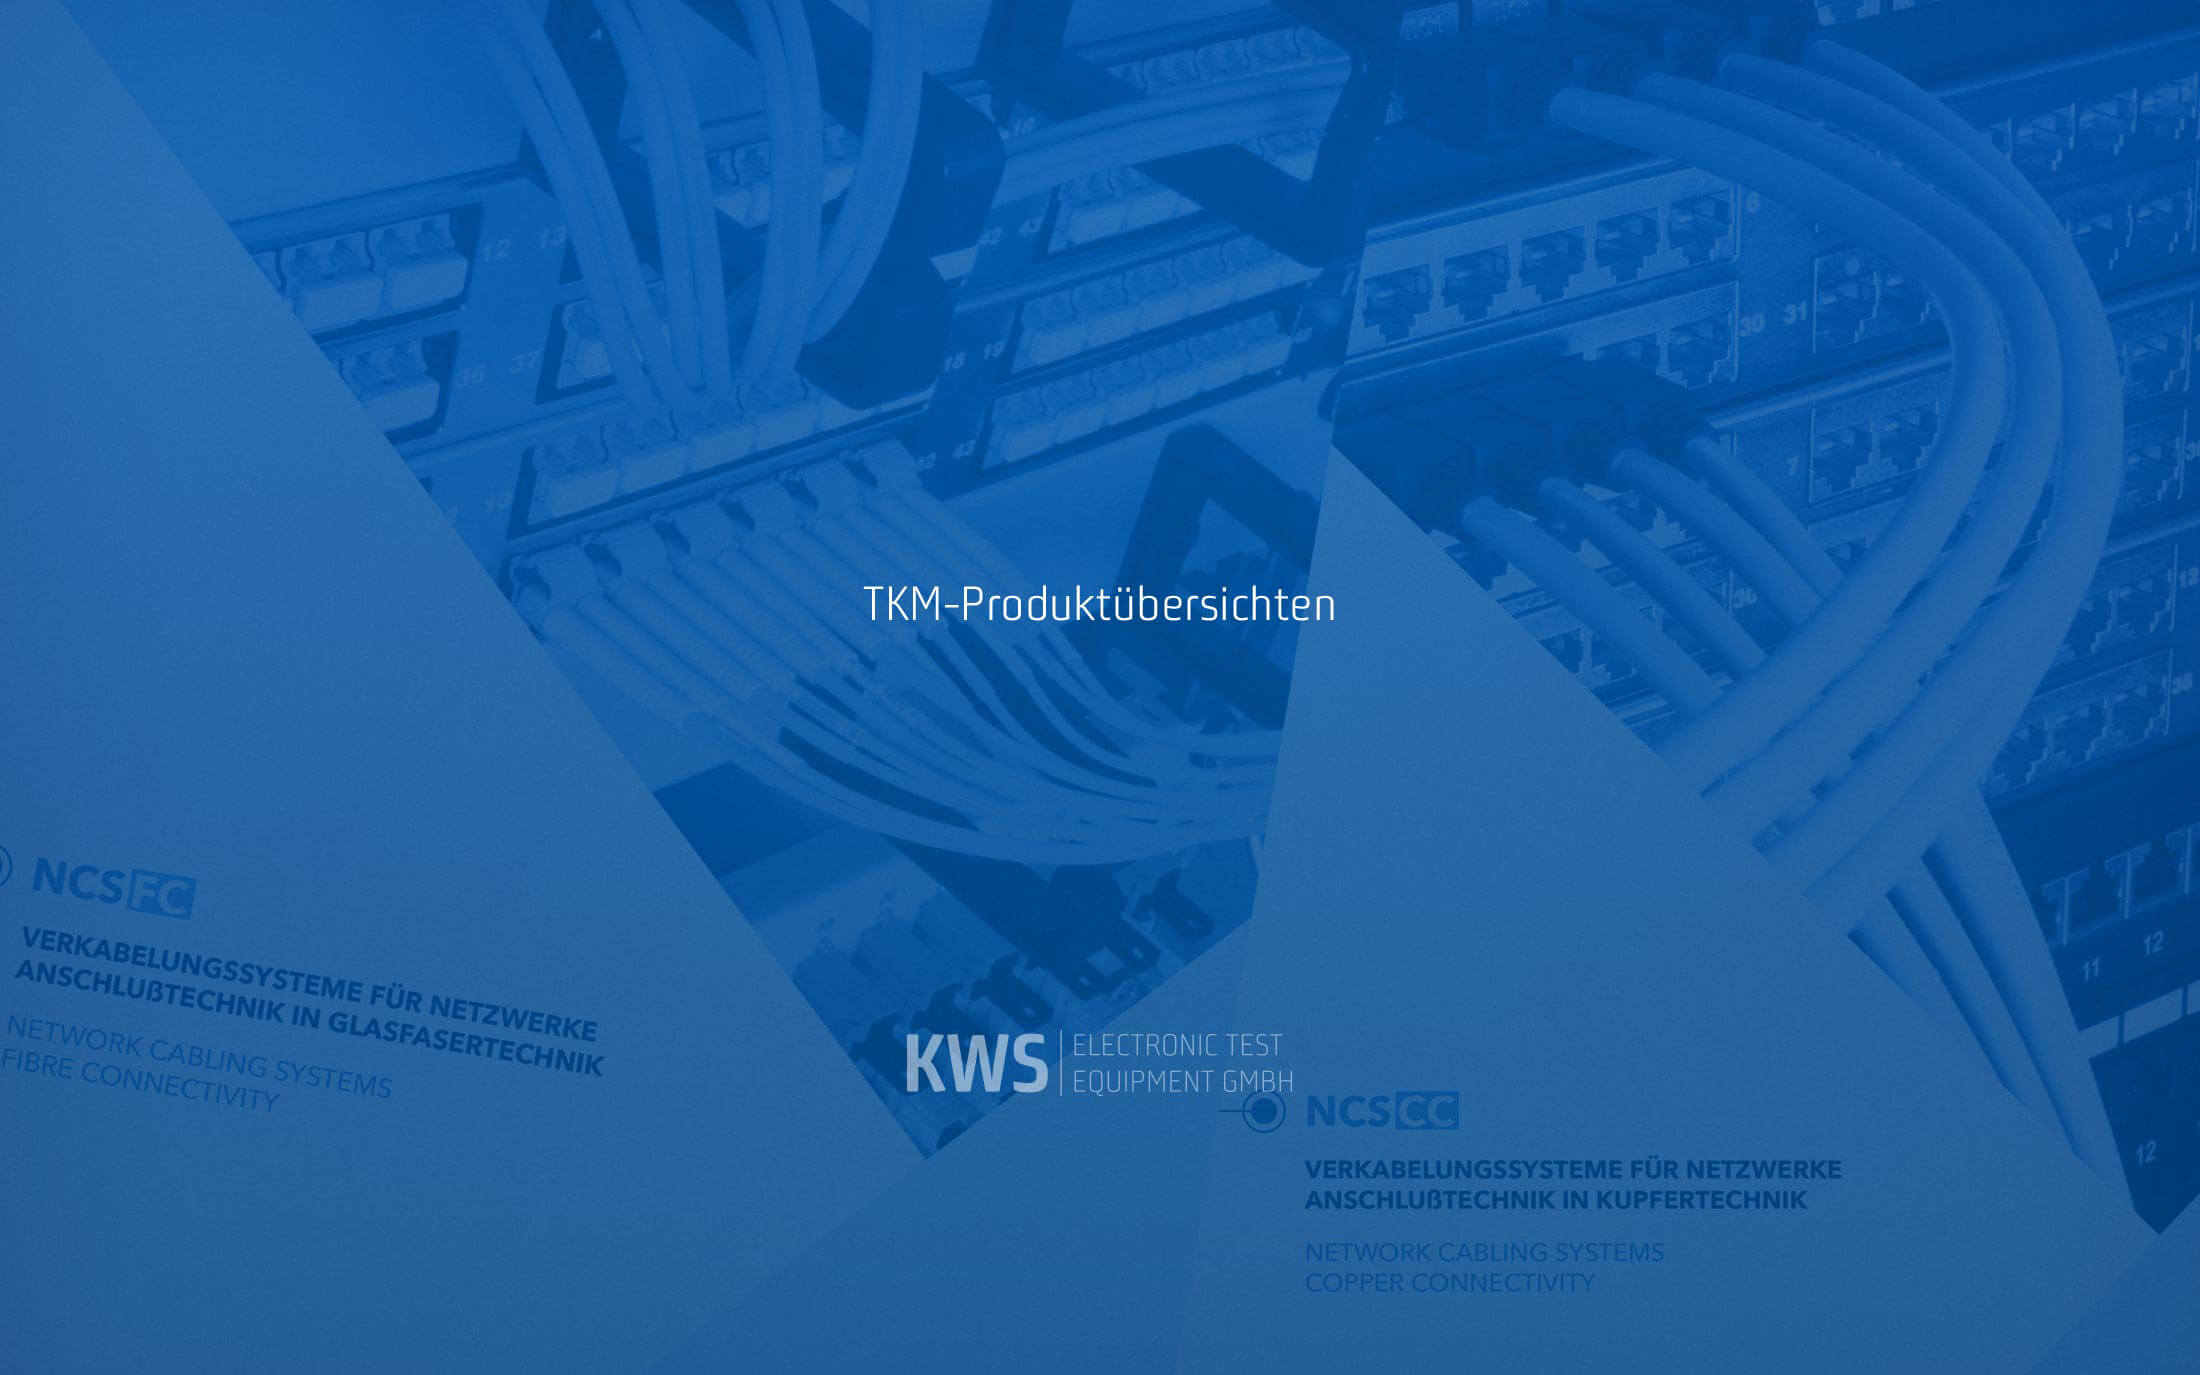 KWS Electronic News 2020: TKM-Produktübersichten immer aktuell